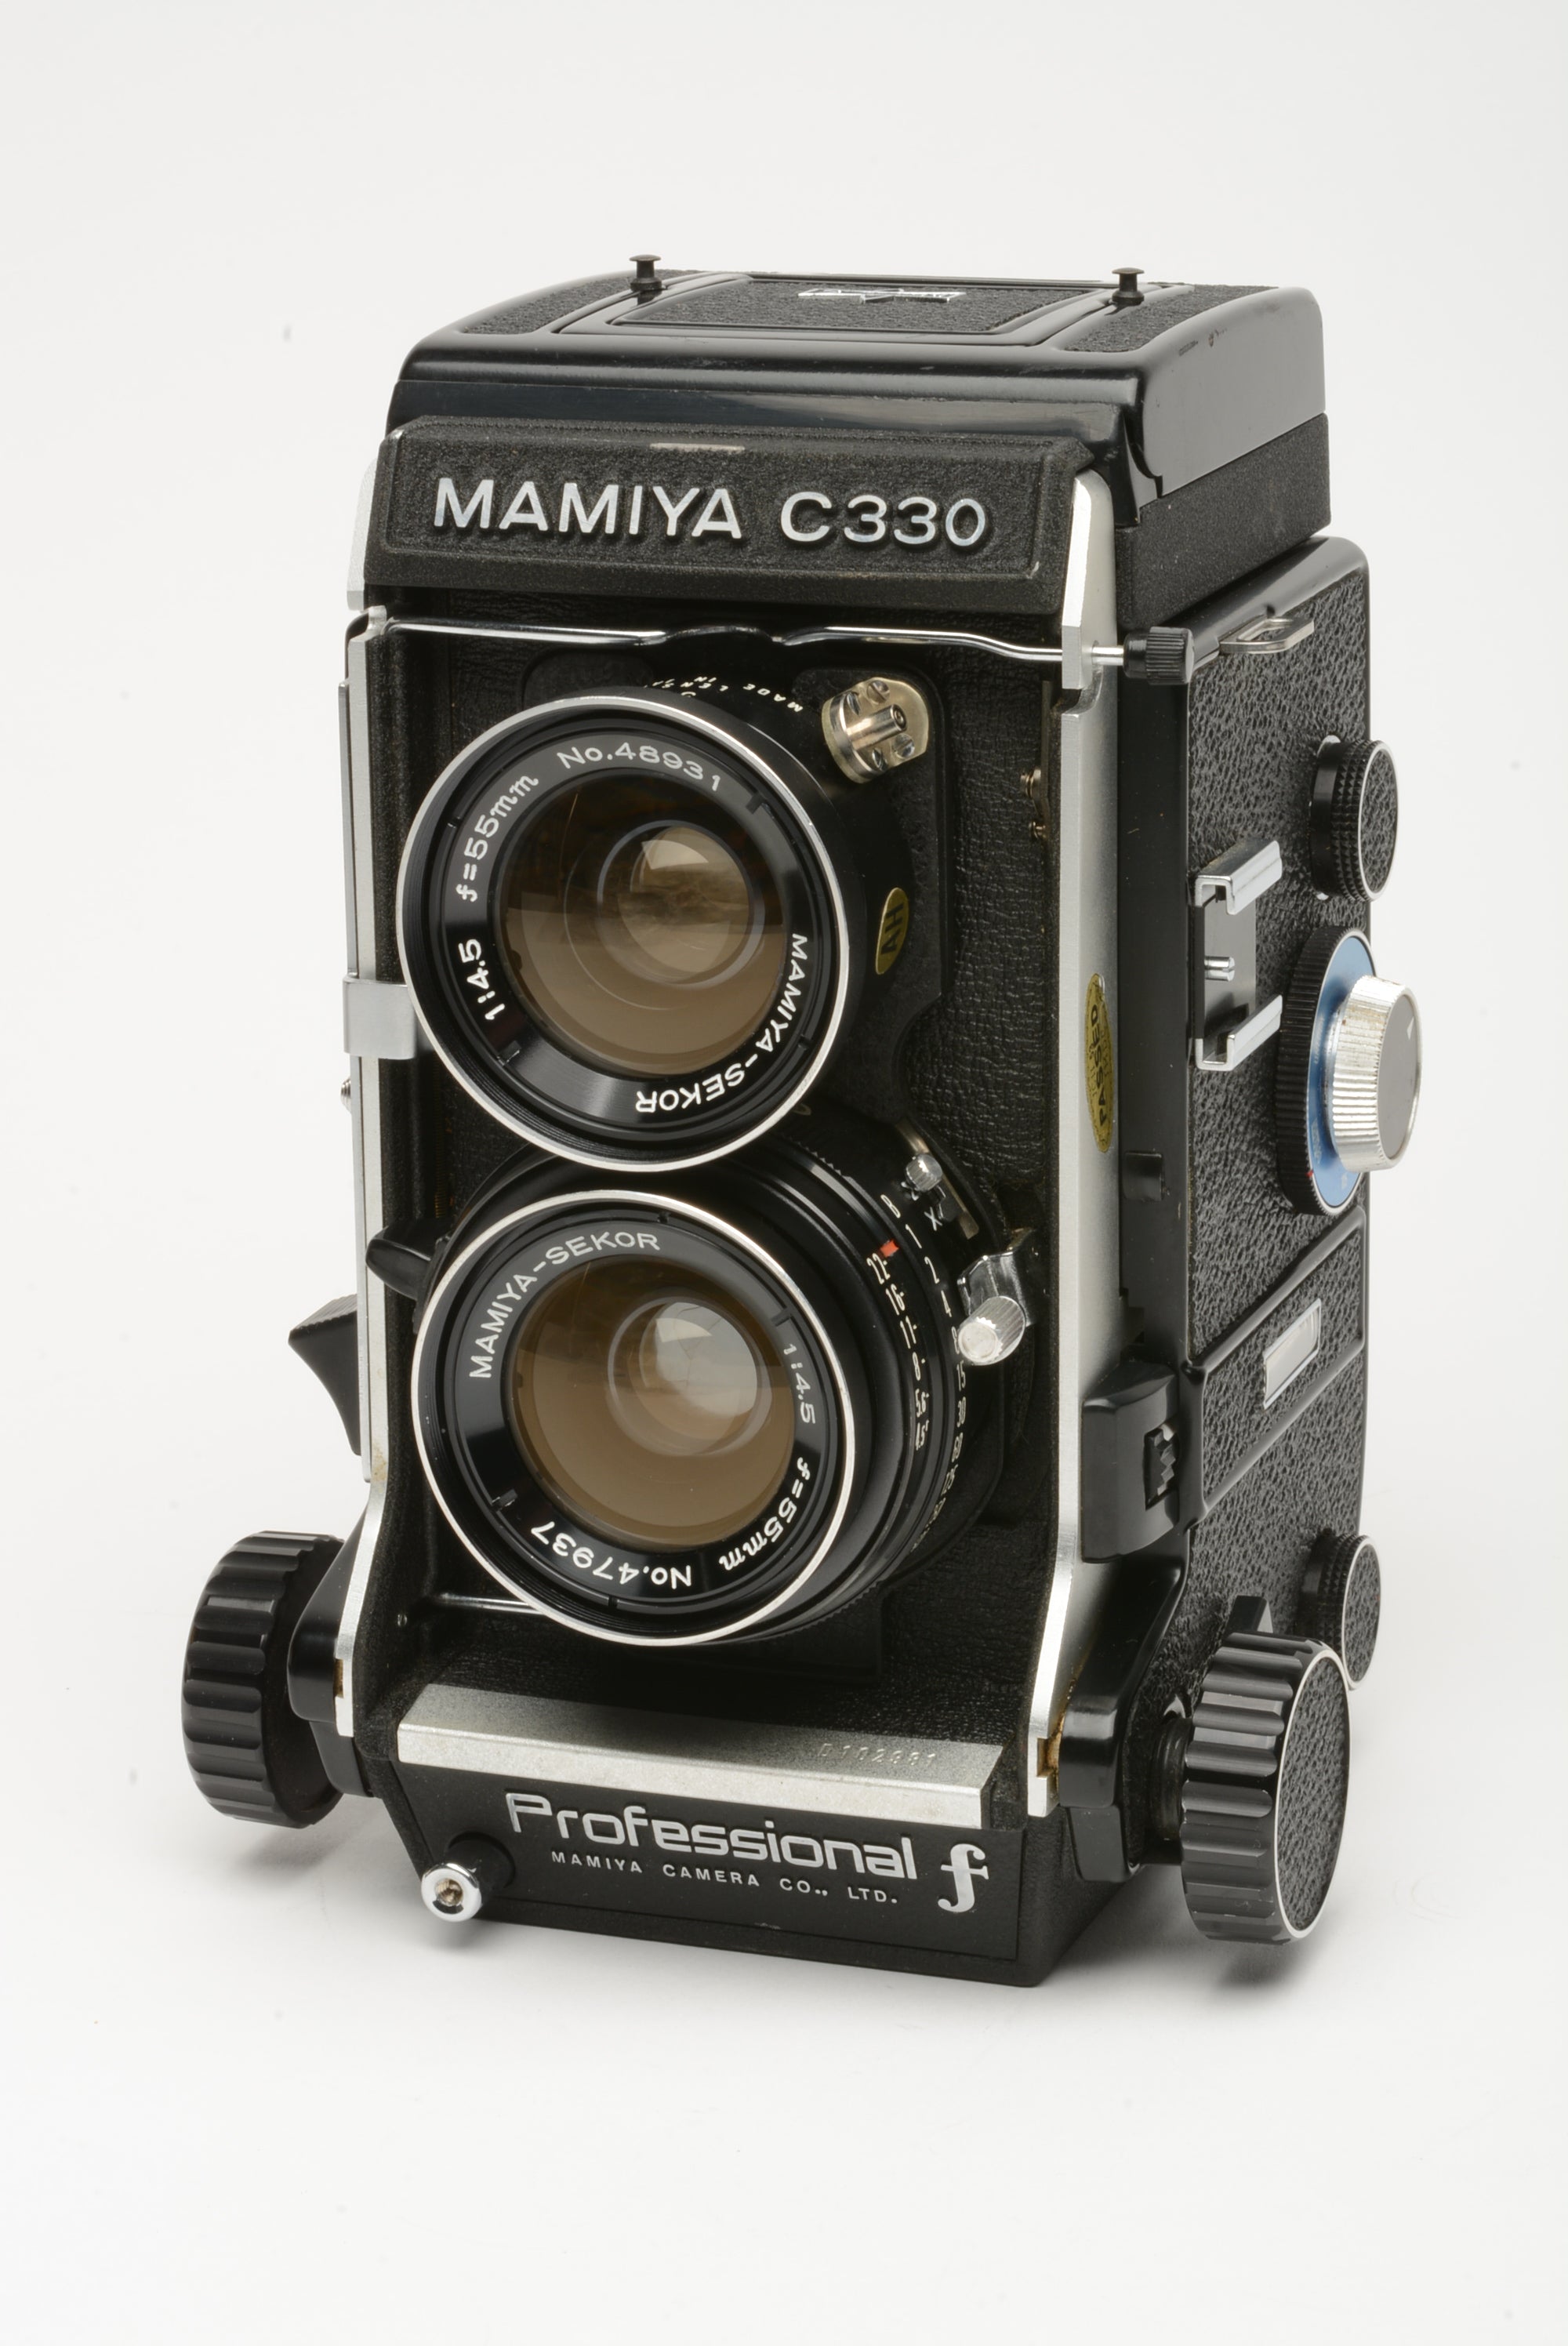 Mamiya C330 Professional F Medium Format TLR w/ 55mm f/4.5 Lens